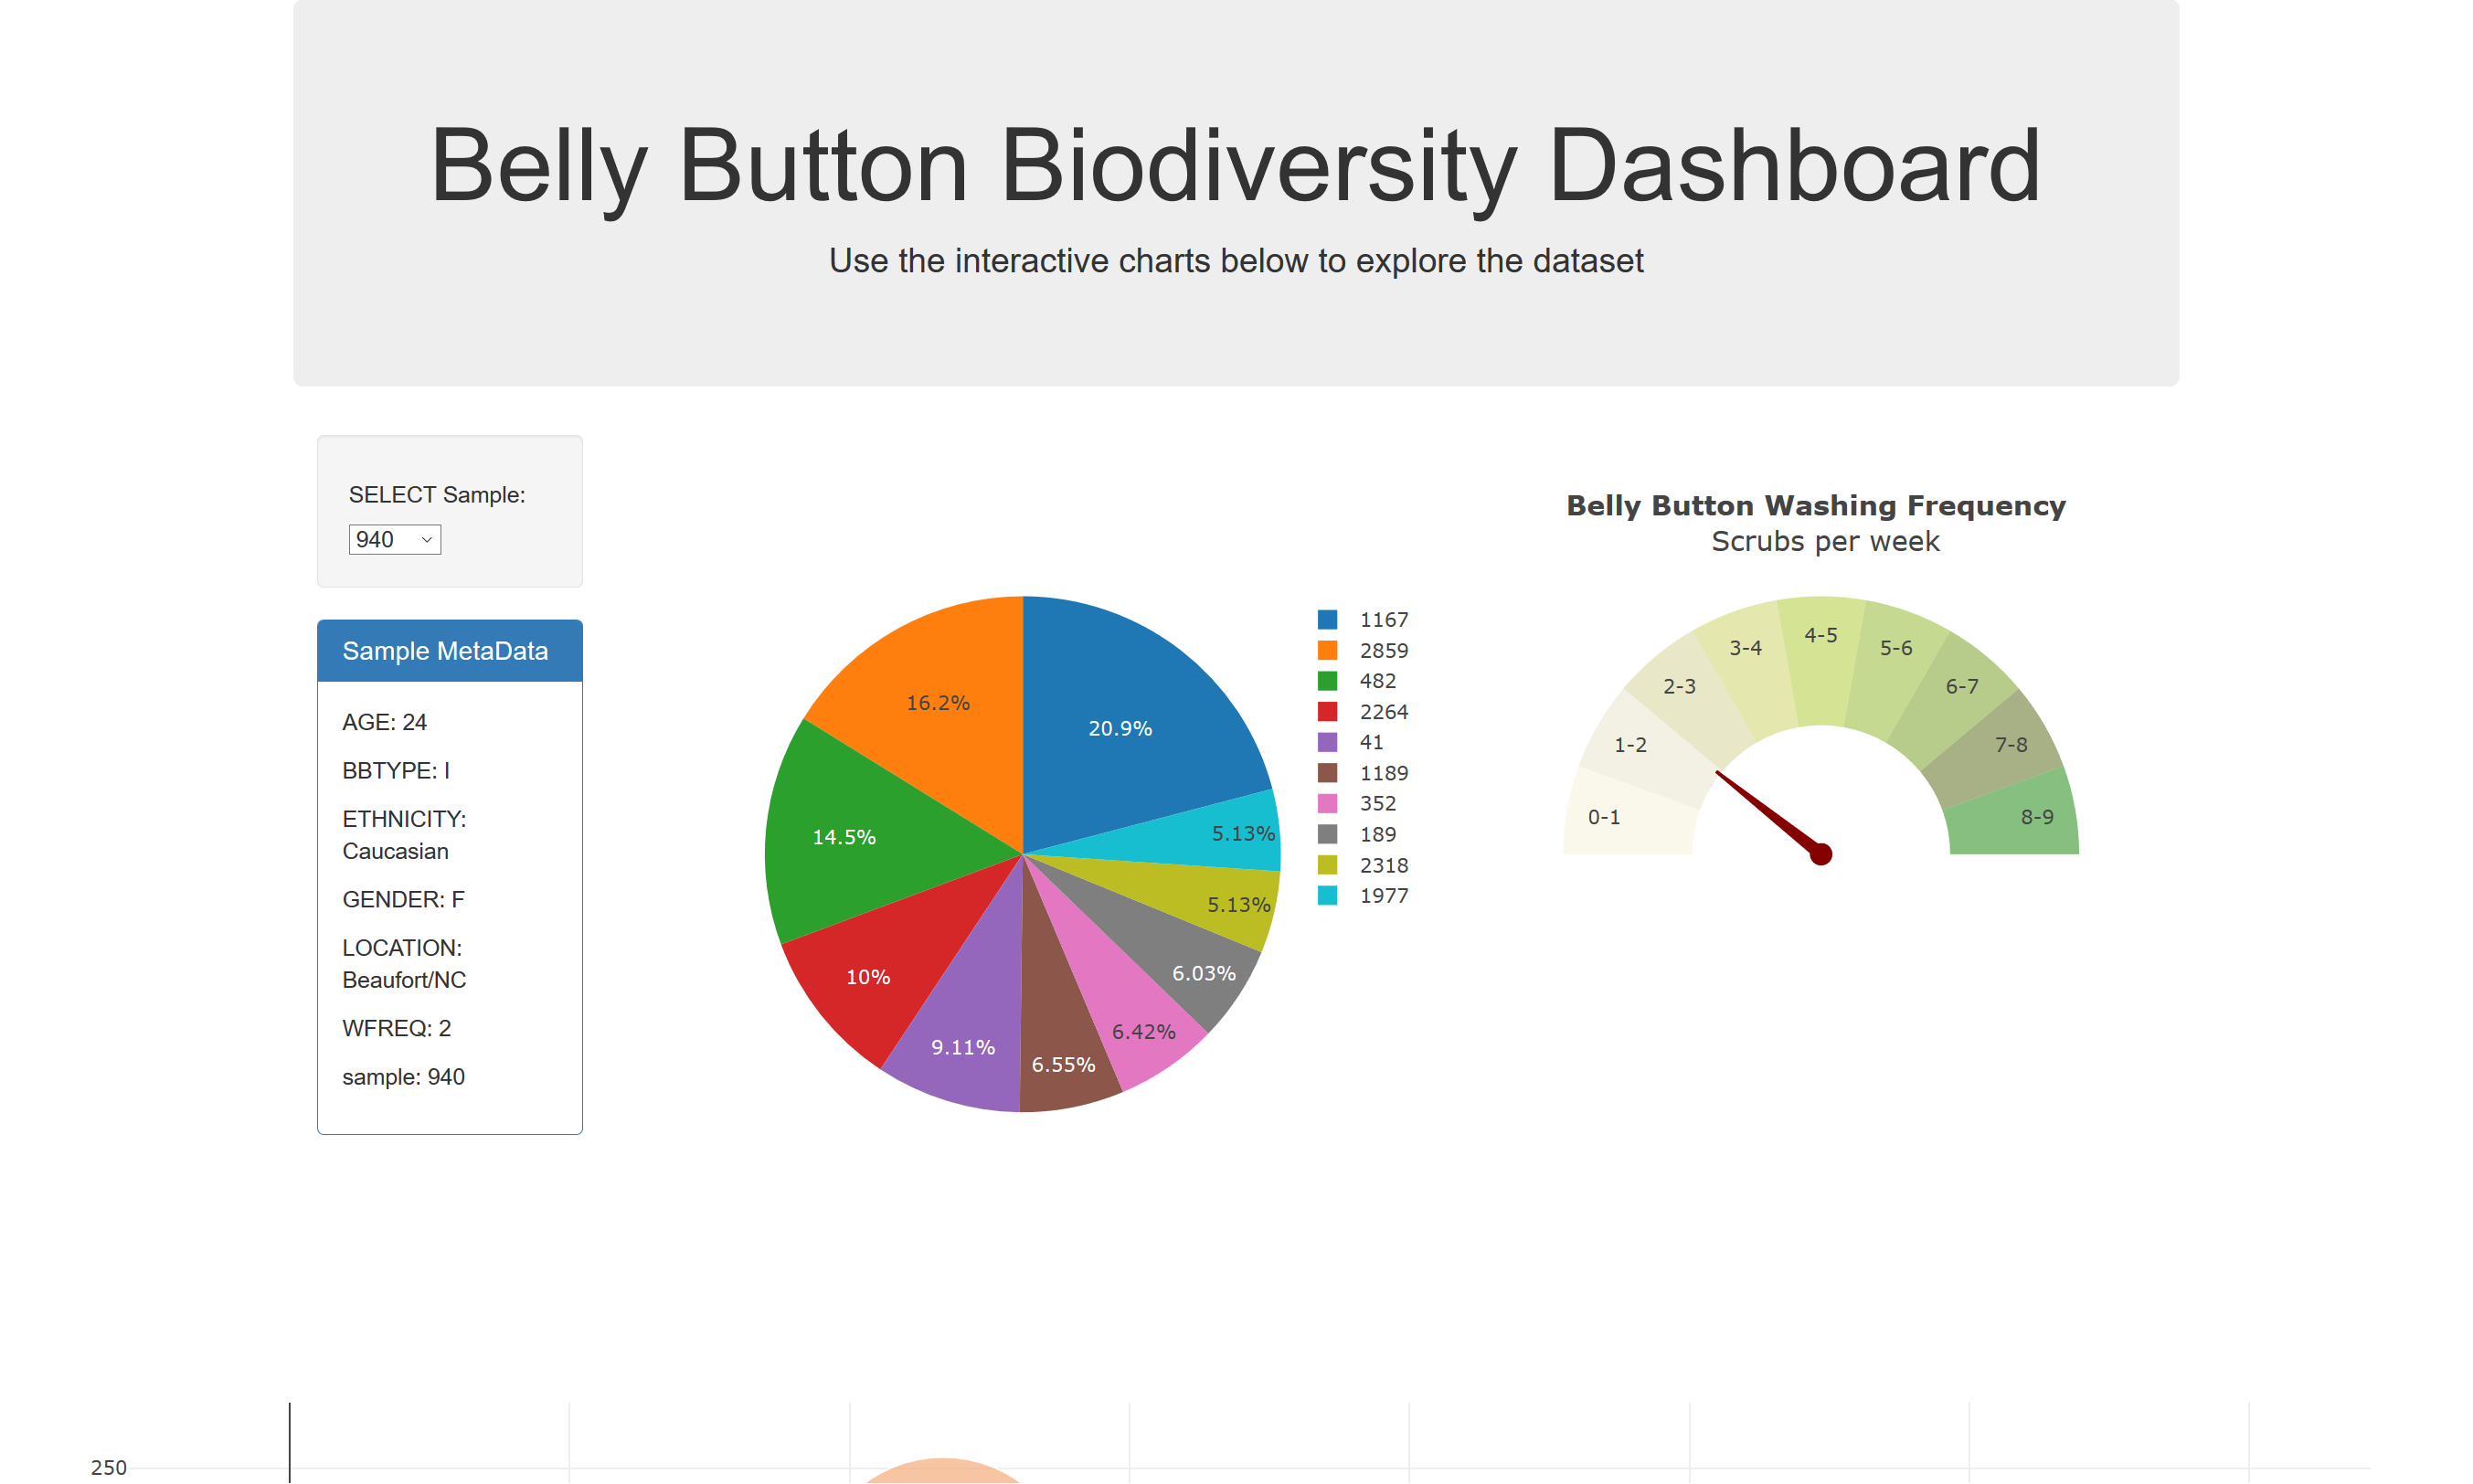 Belly Button Biodiversity screencap